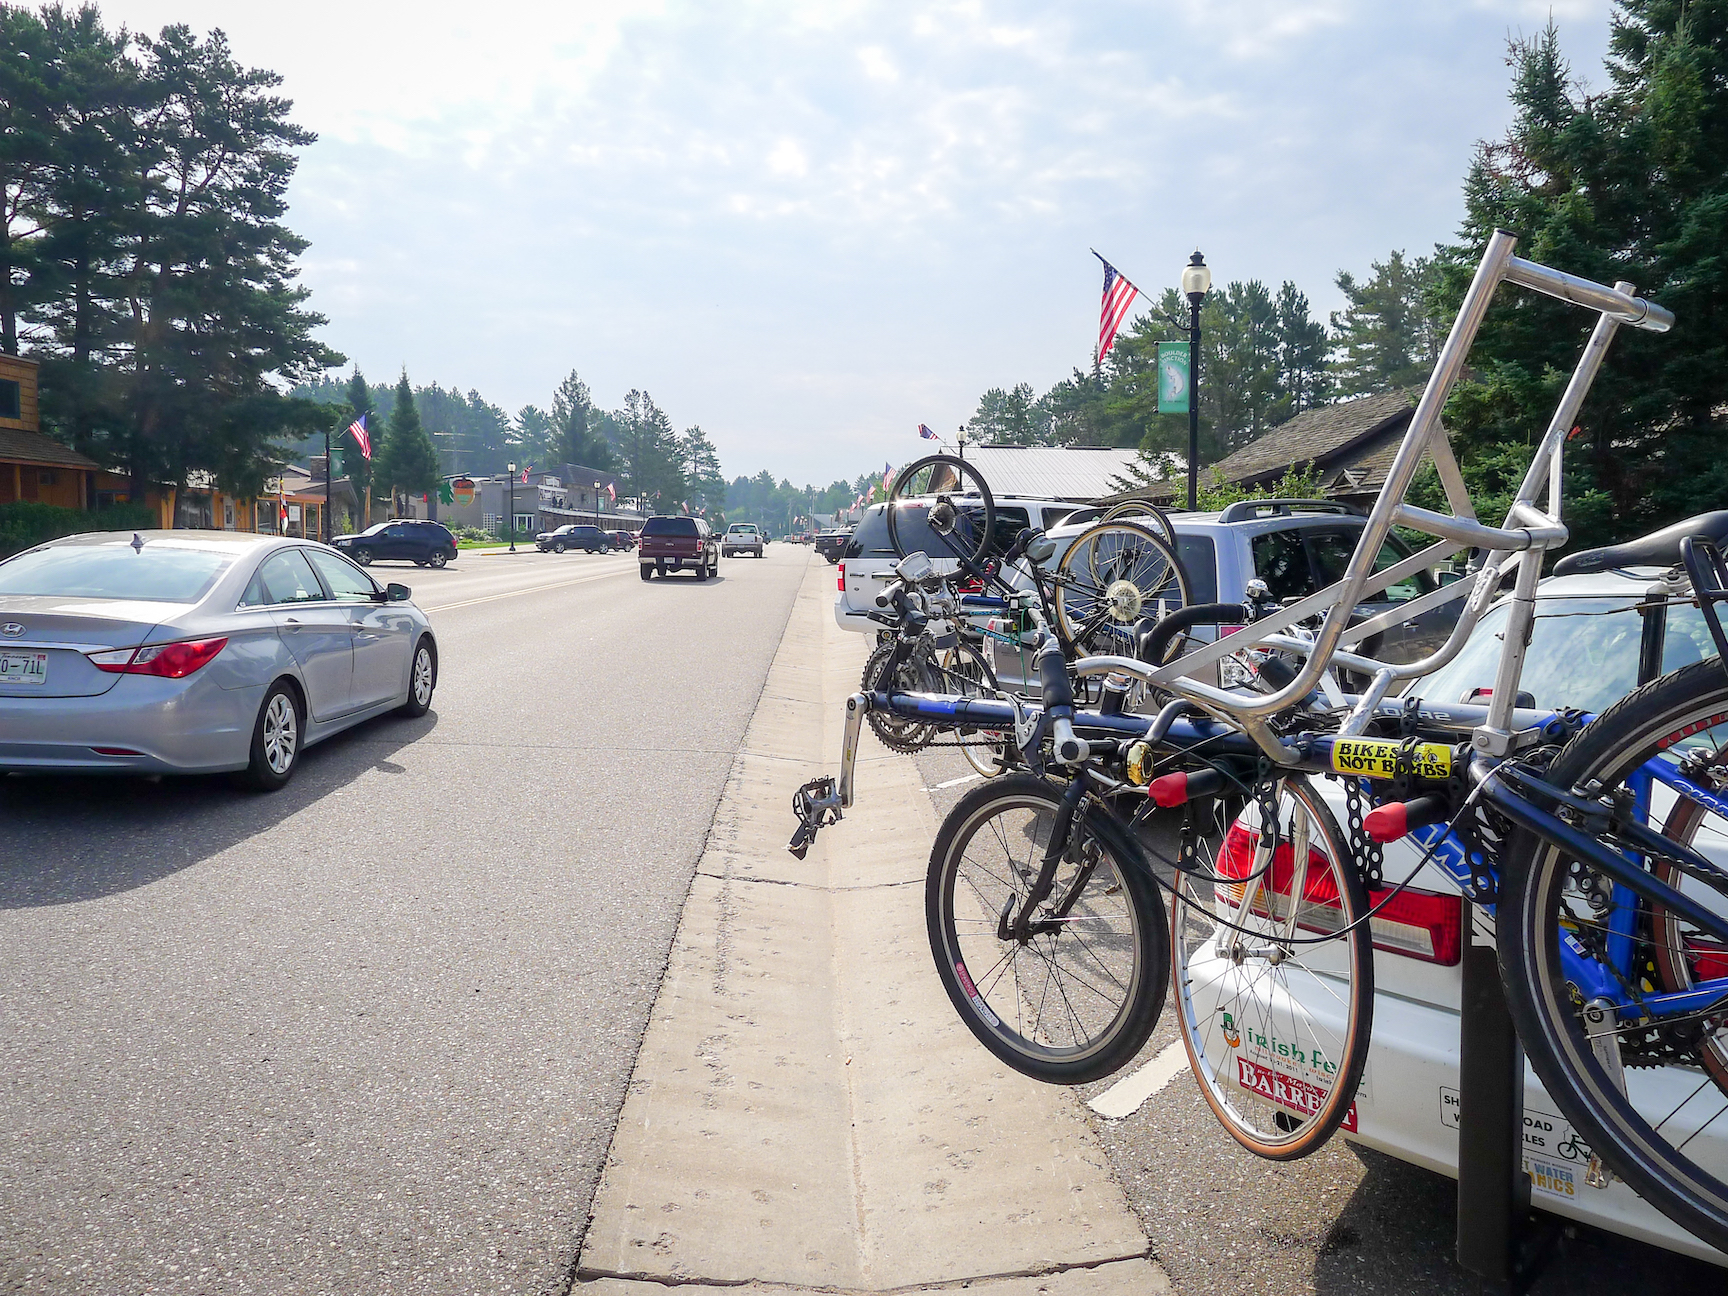 Cars with bike racks parked on street